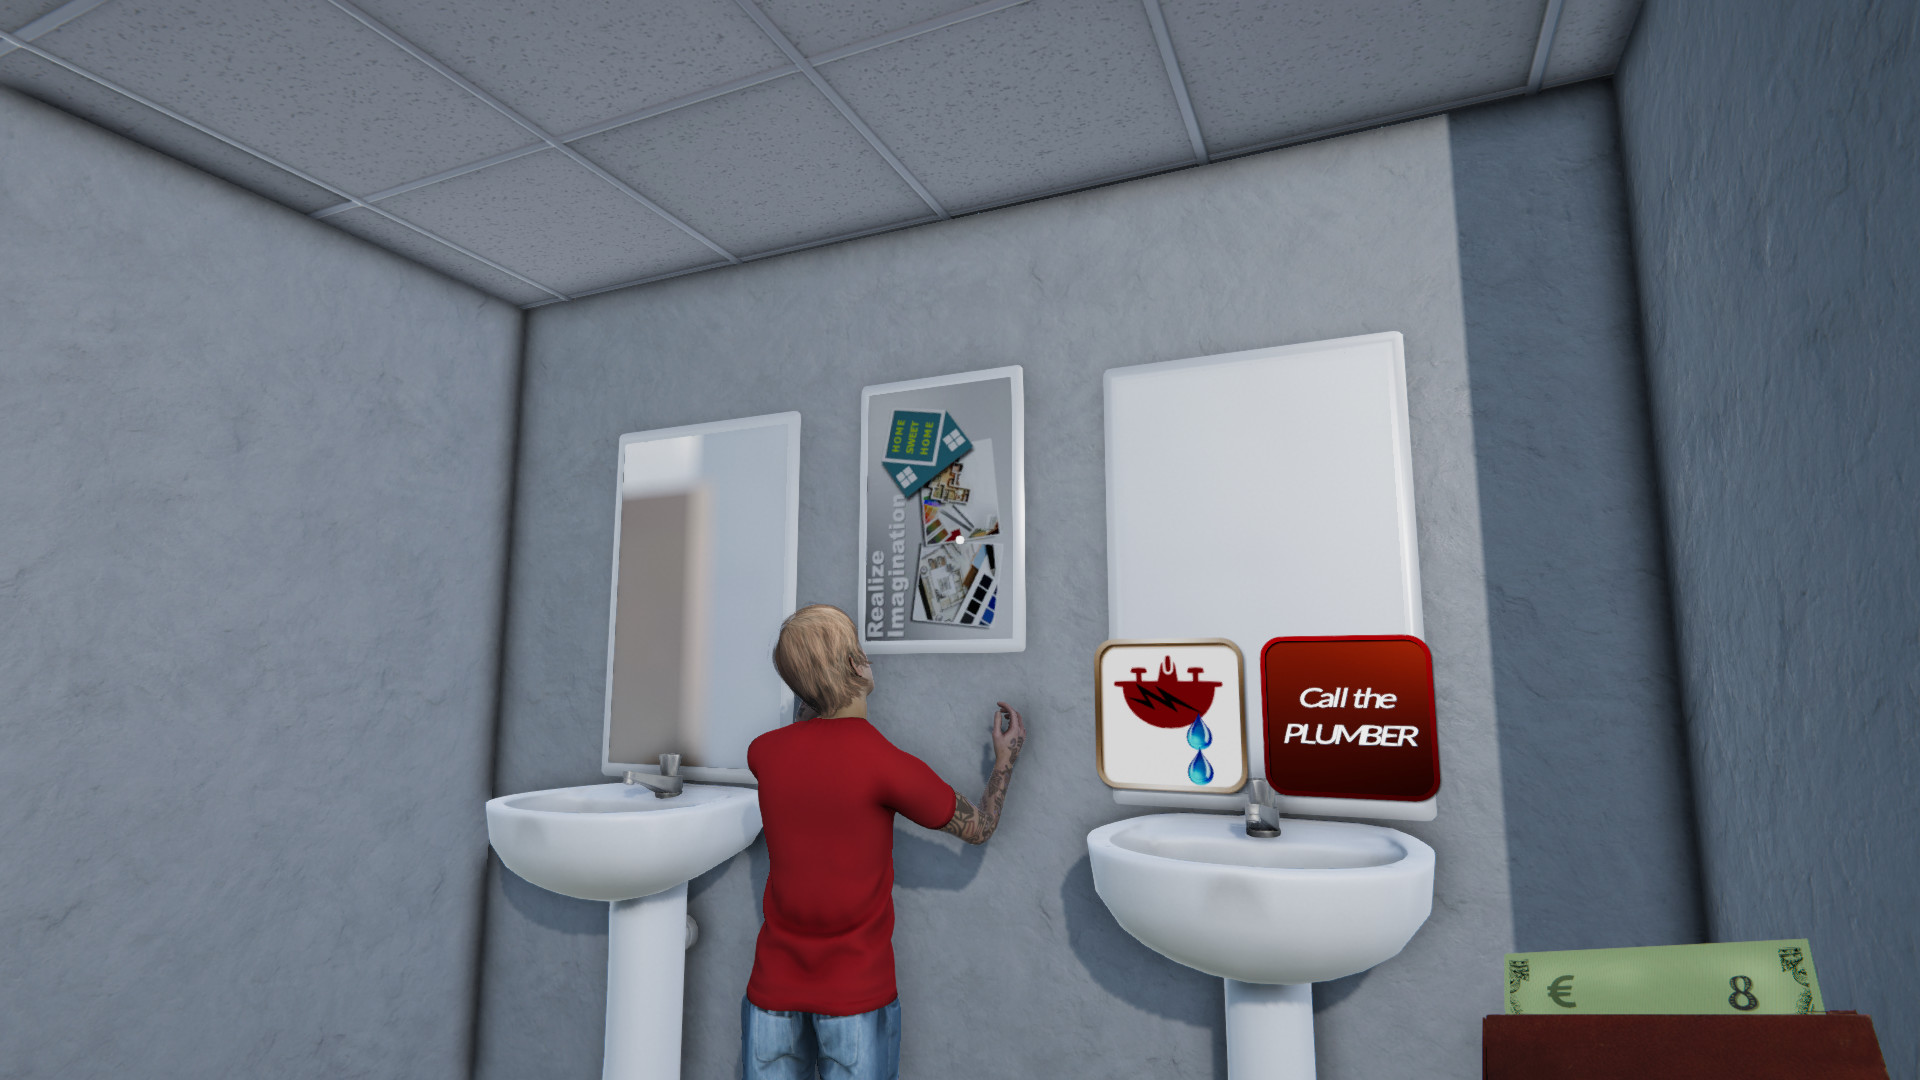 Toilet Management Simulator PLAZA PC Version Game Free Download